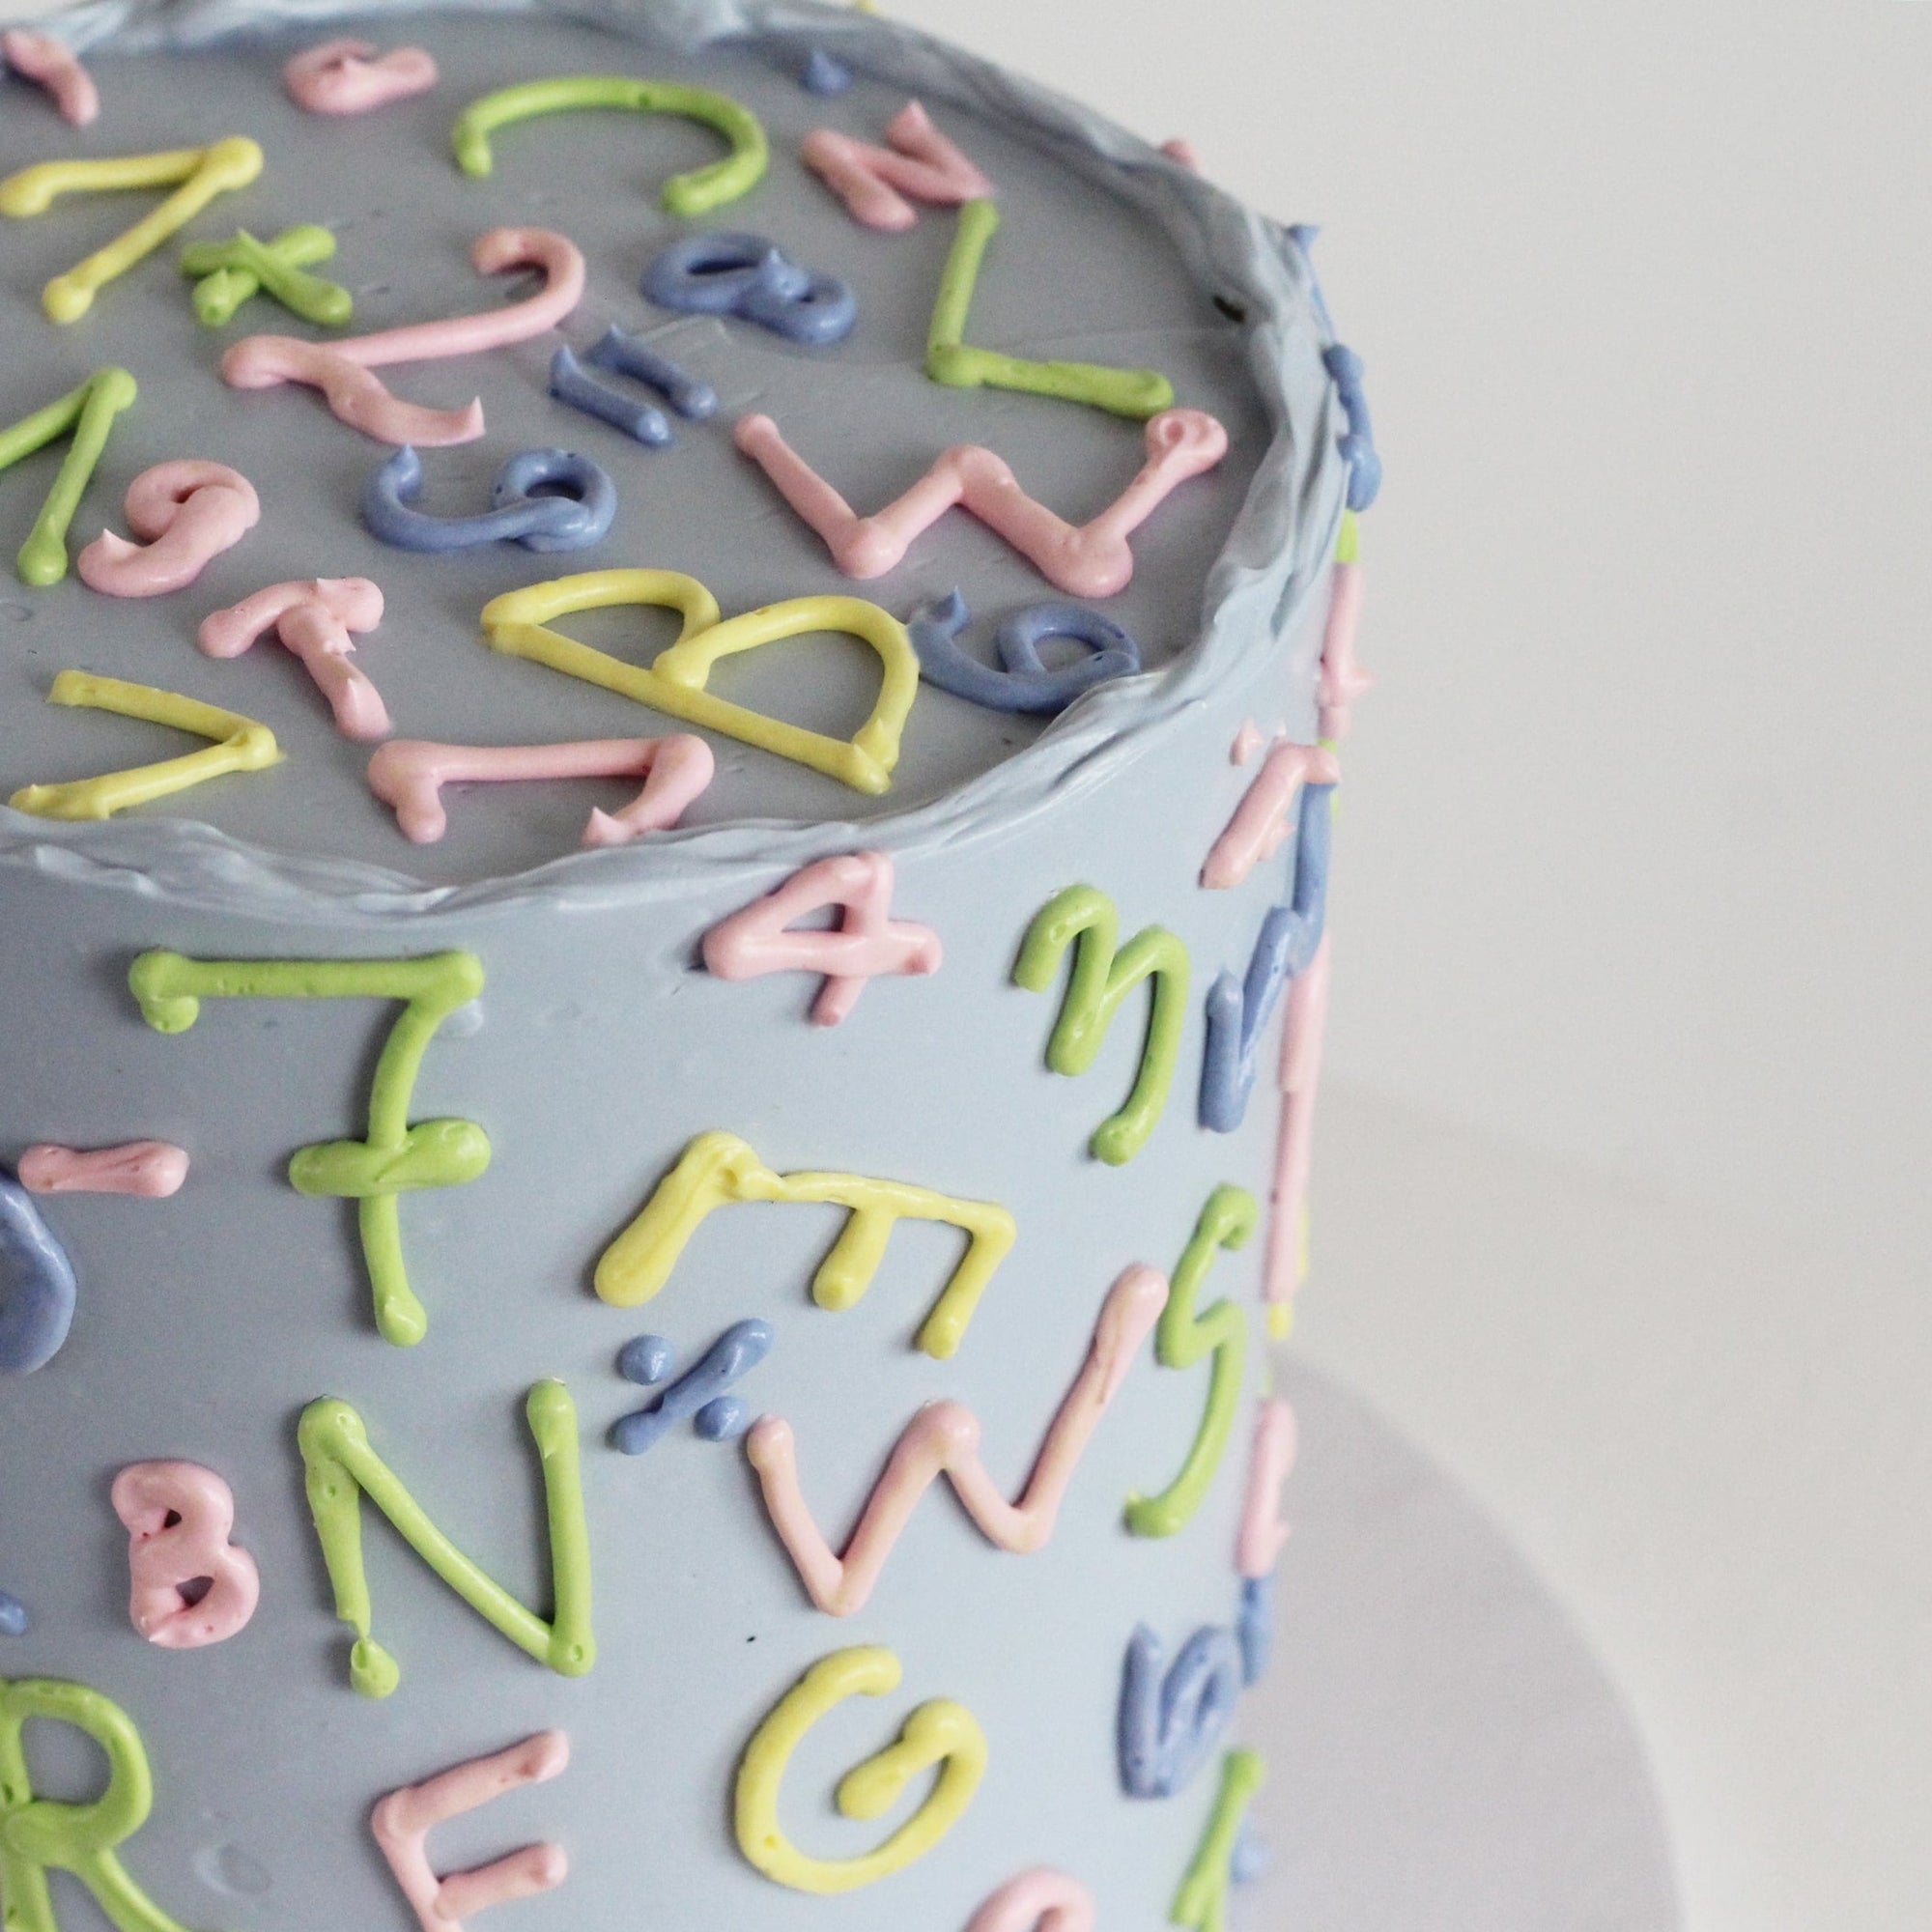 ABC 123 - Graduation - Decorated Cake by Sugar Sweet - CakesDecor